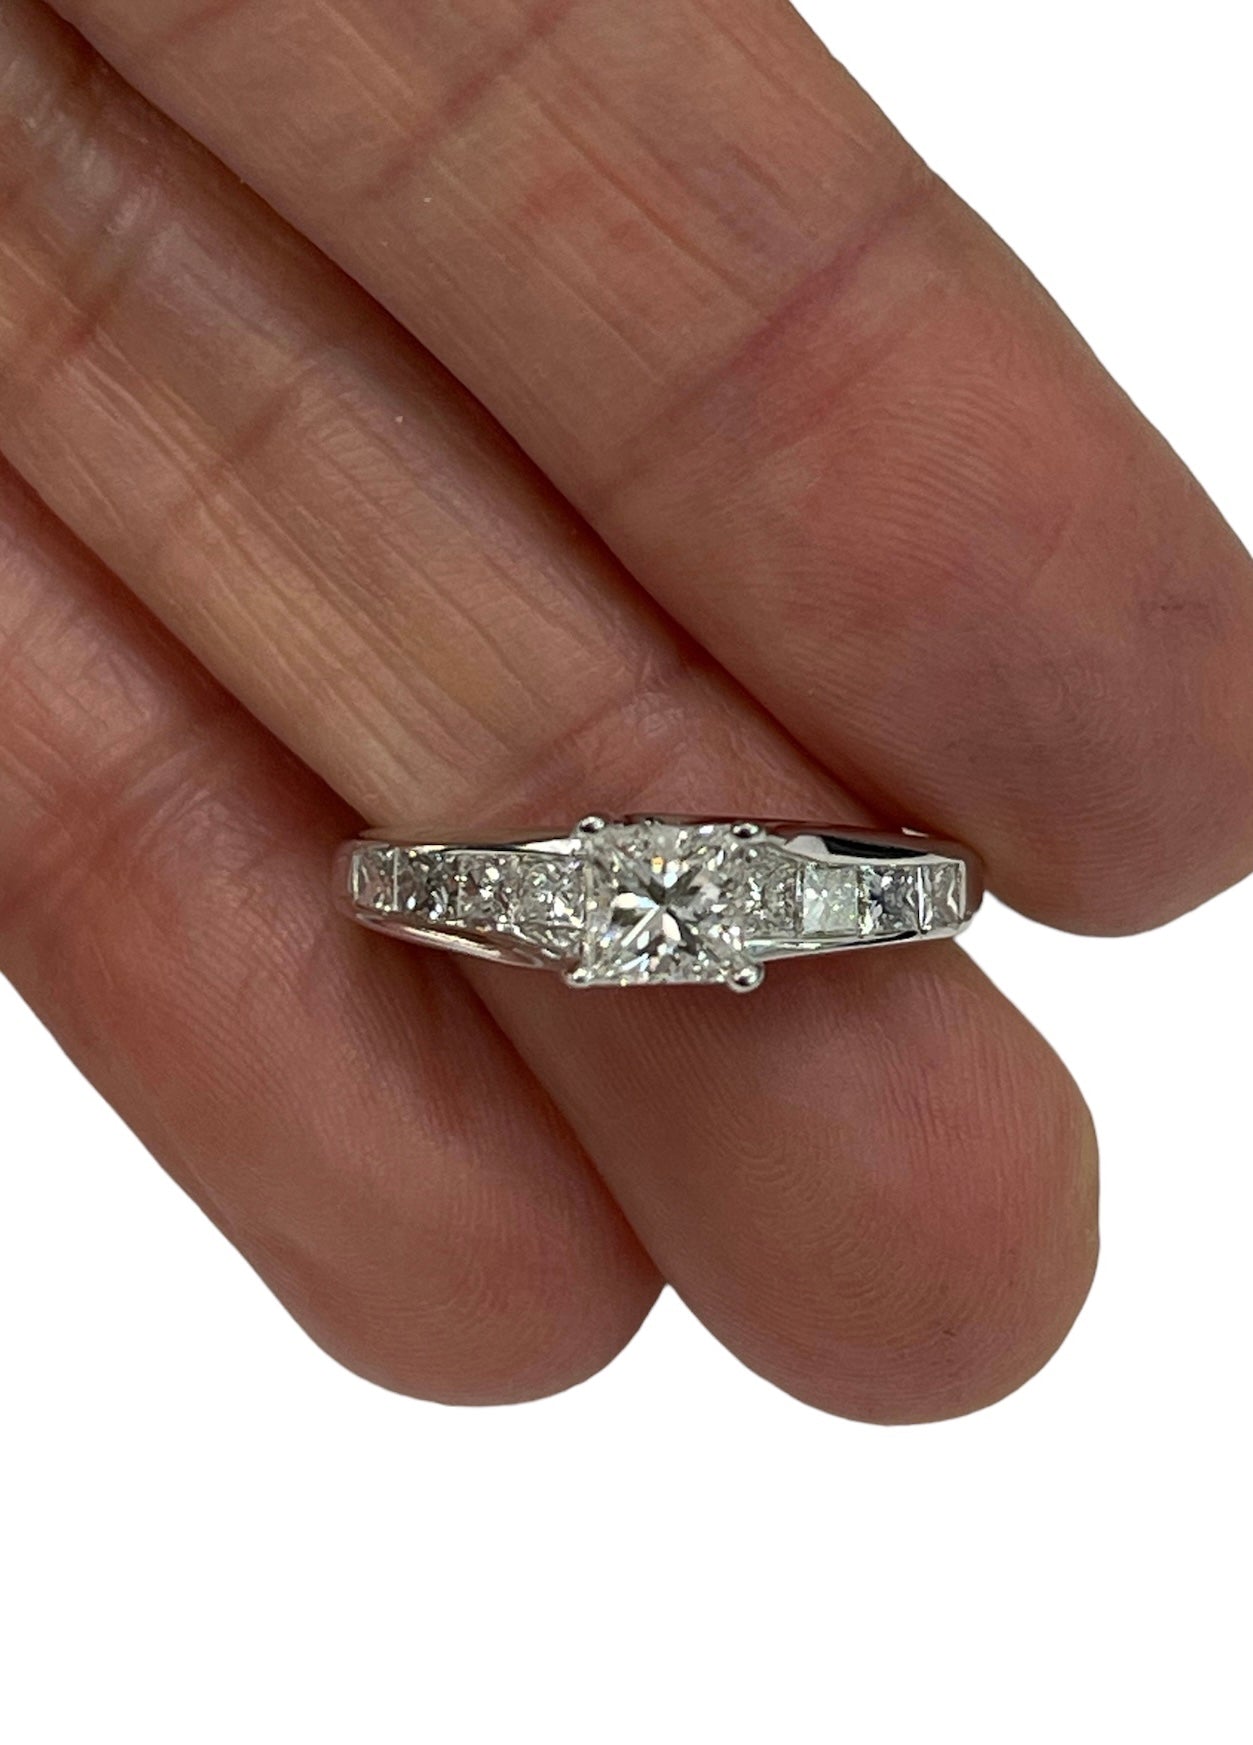 Princess Cut Diamond Engagement Ring Set White Gold 14kt